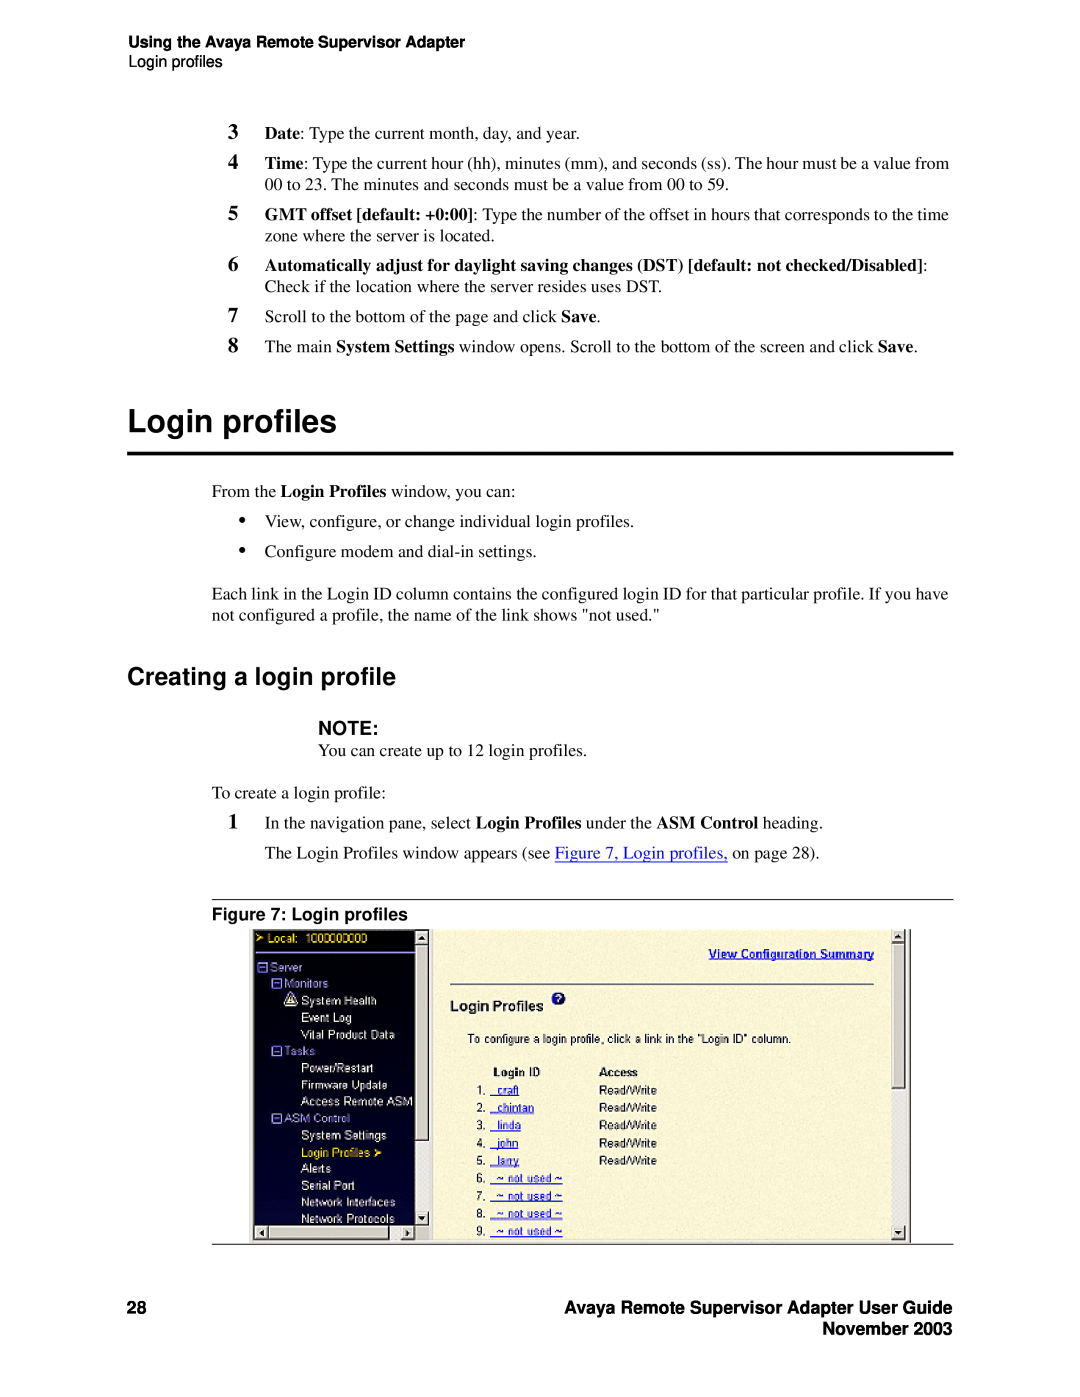 Avaya S8500 manual Login profiles, Creating a login profile, Avaya Remote Supervisor Adapter User Guide, November 